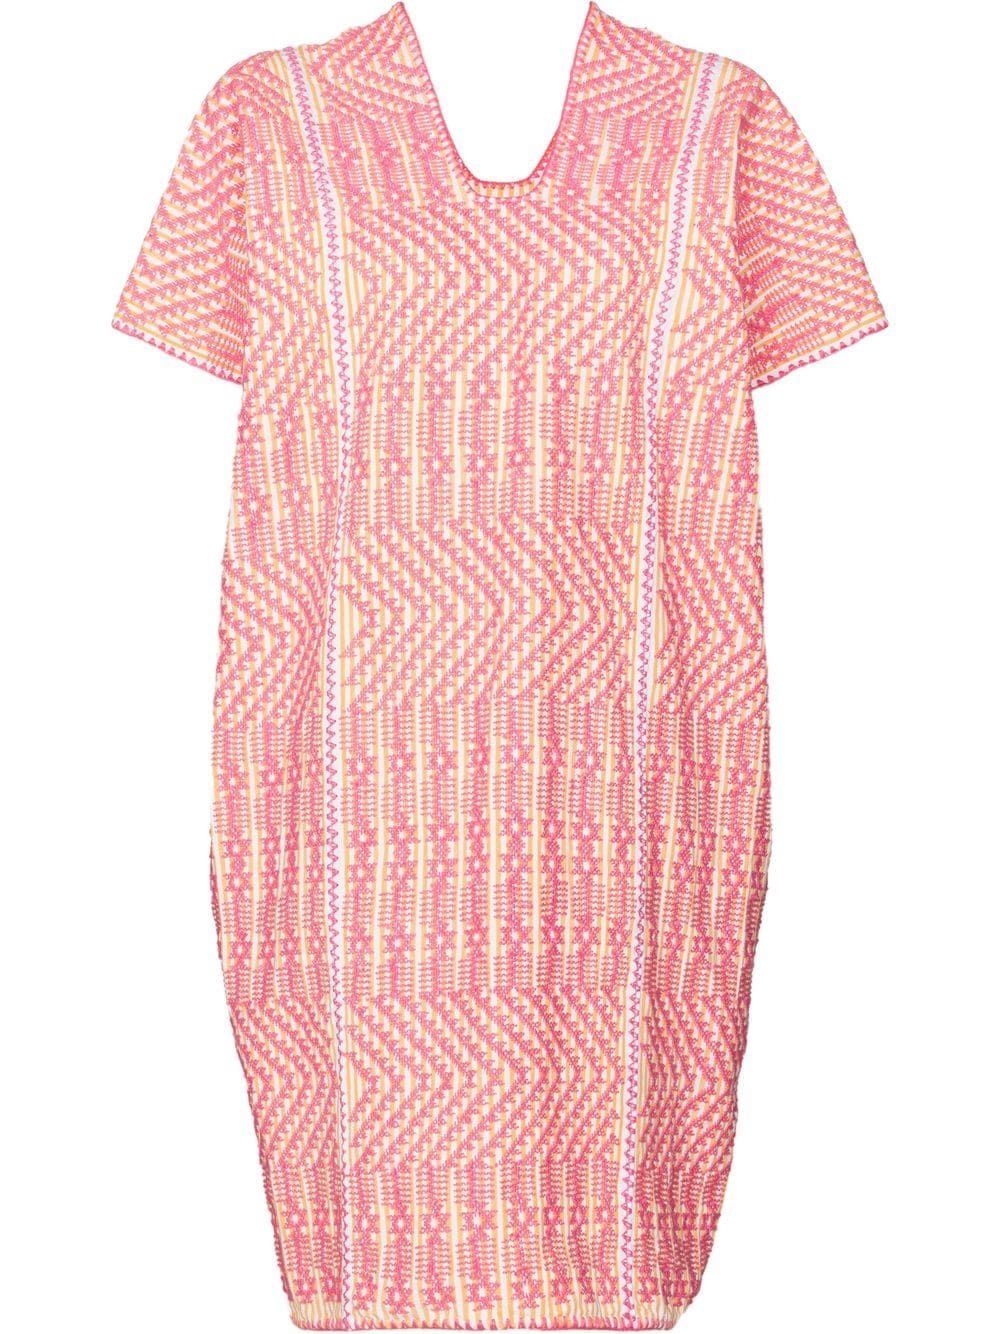 Pippa Holt Embroidered Shift Dress - Farfetch | Farfetch Global